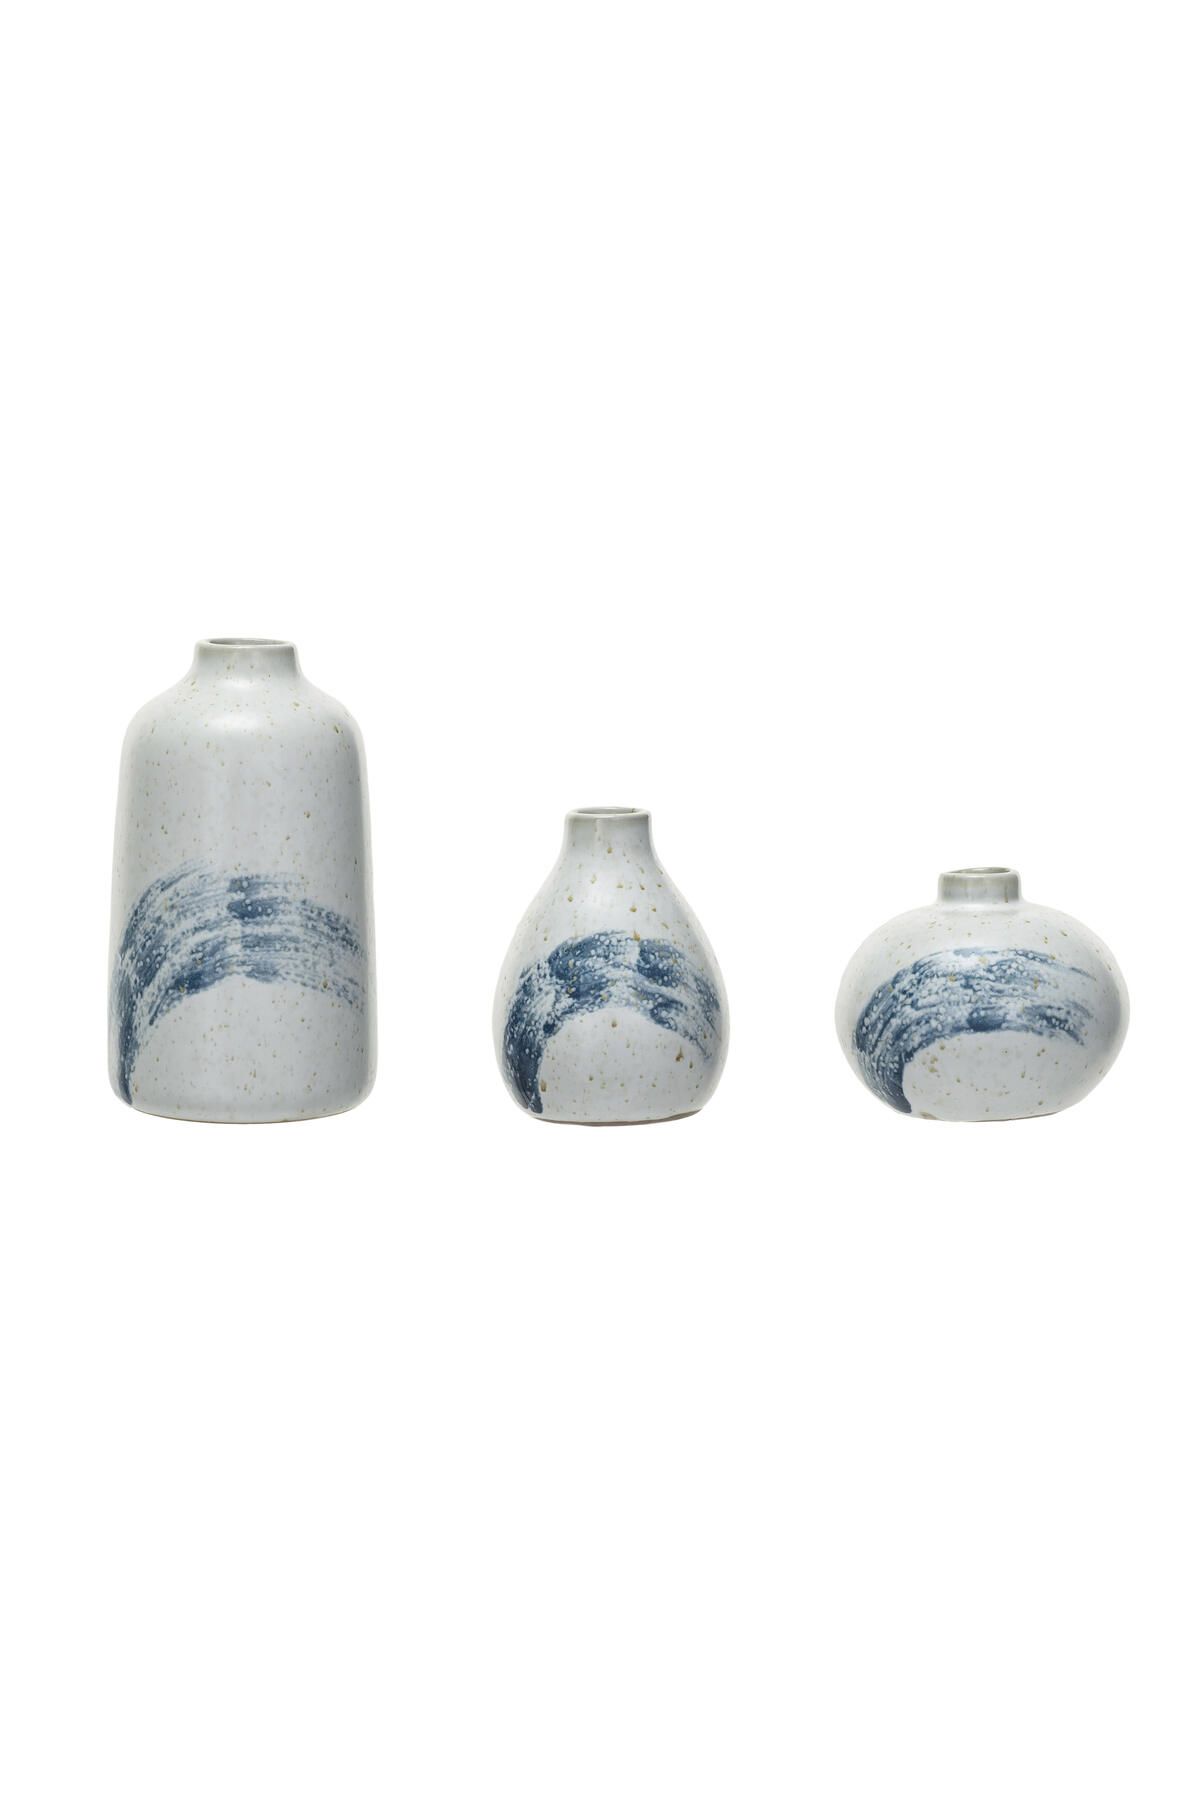 Warm Design El Boyaması Seramik Vazolar